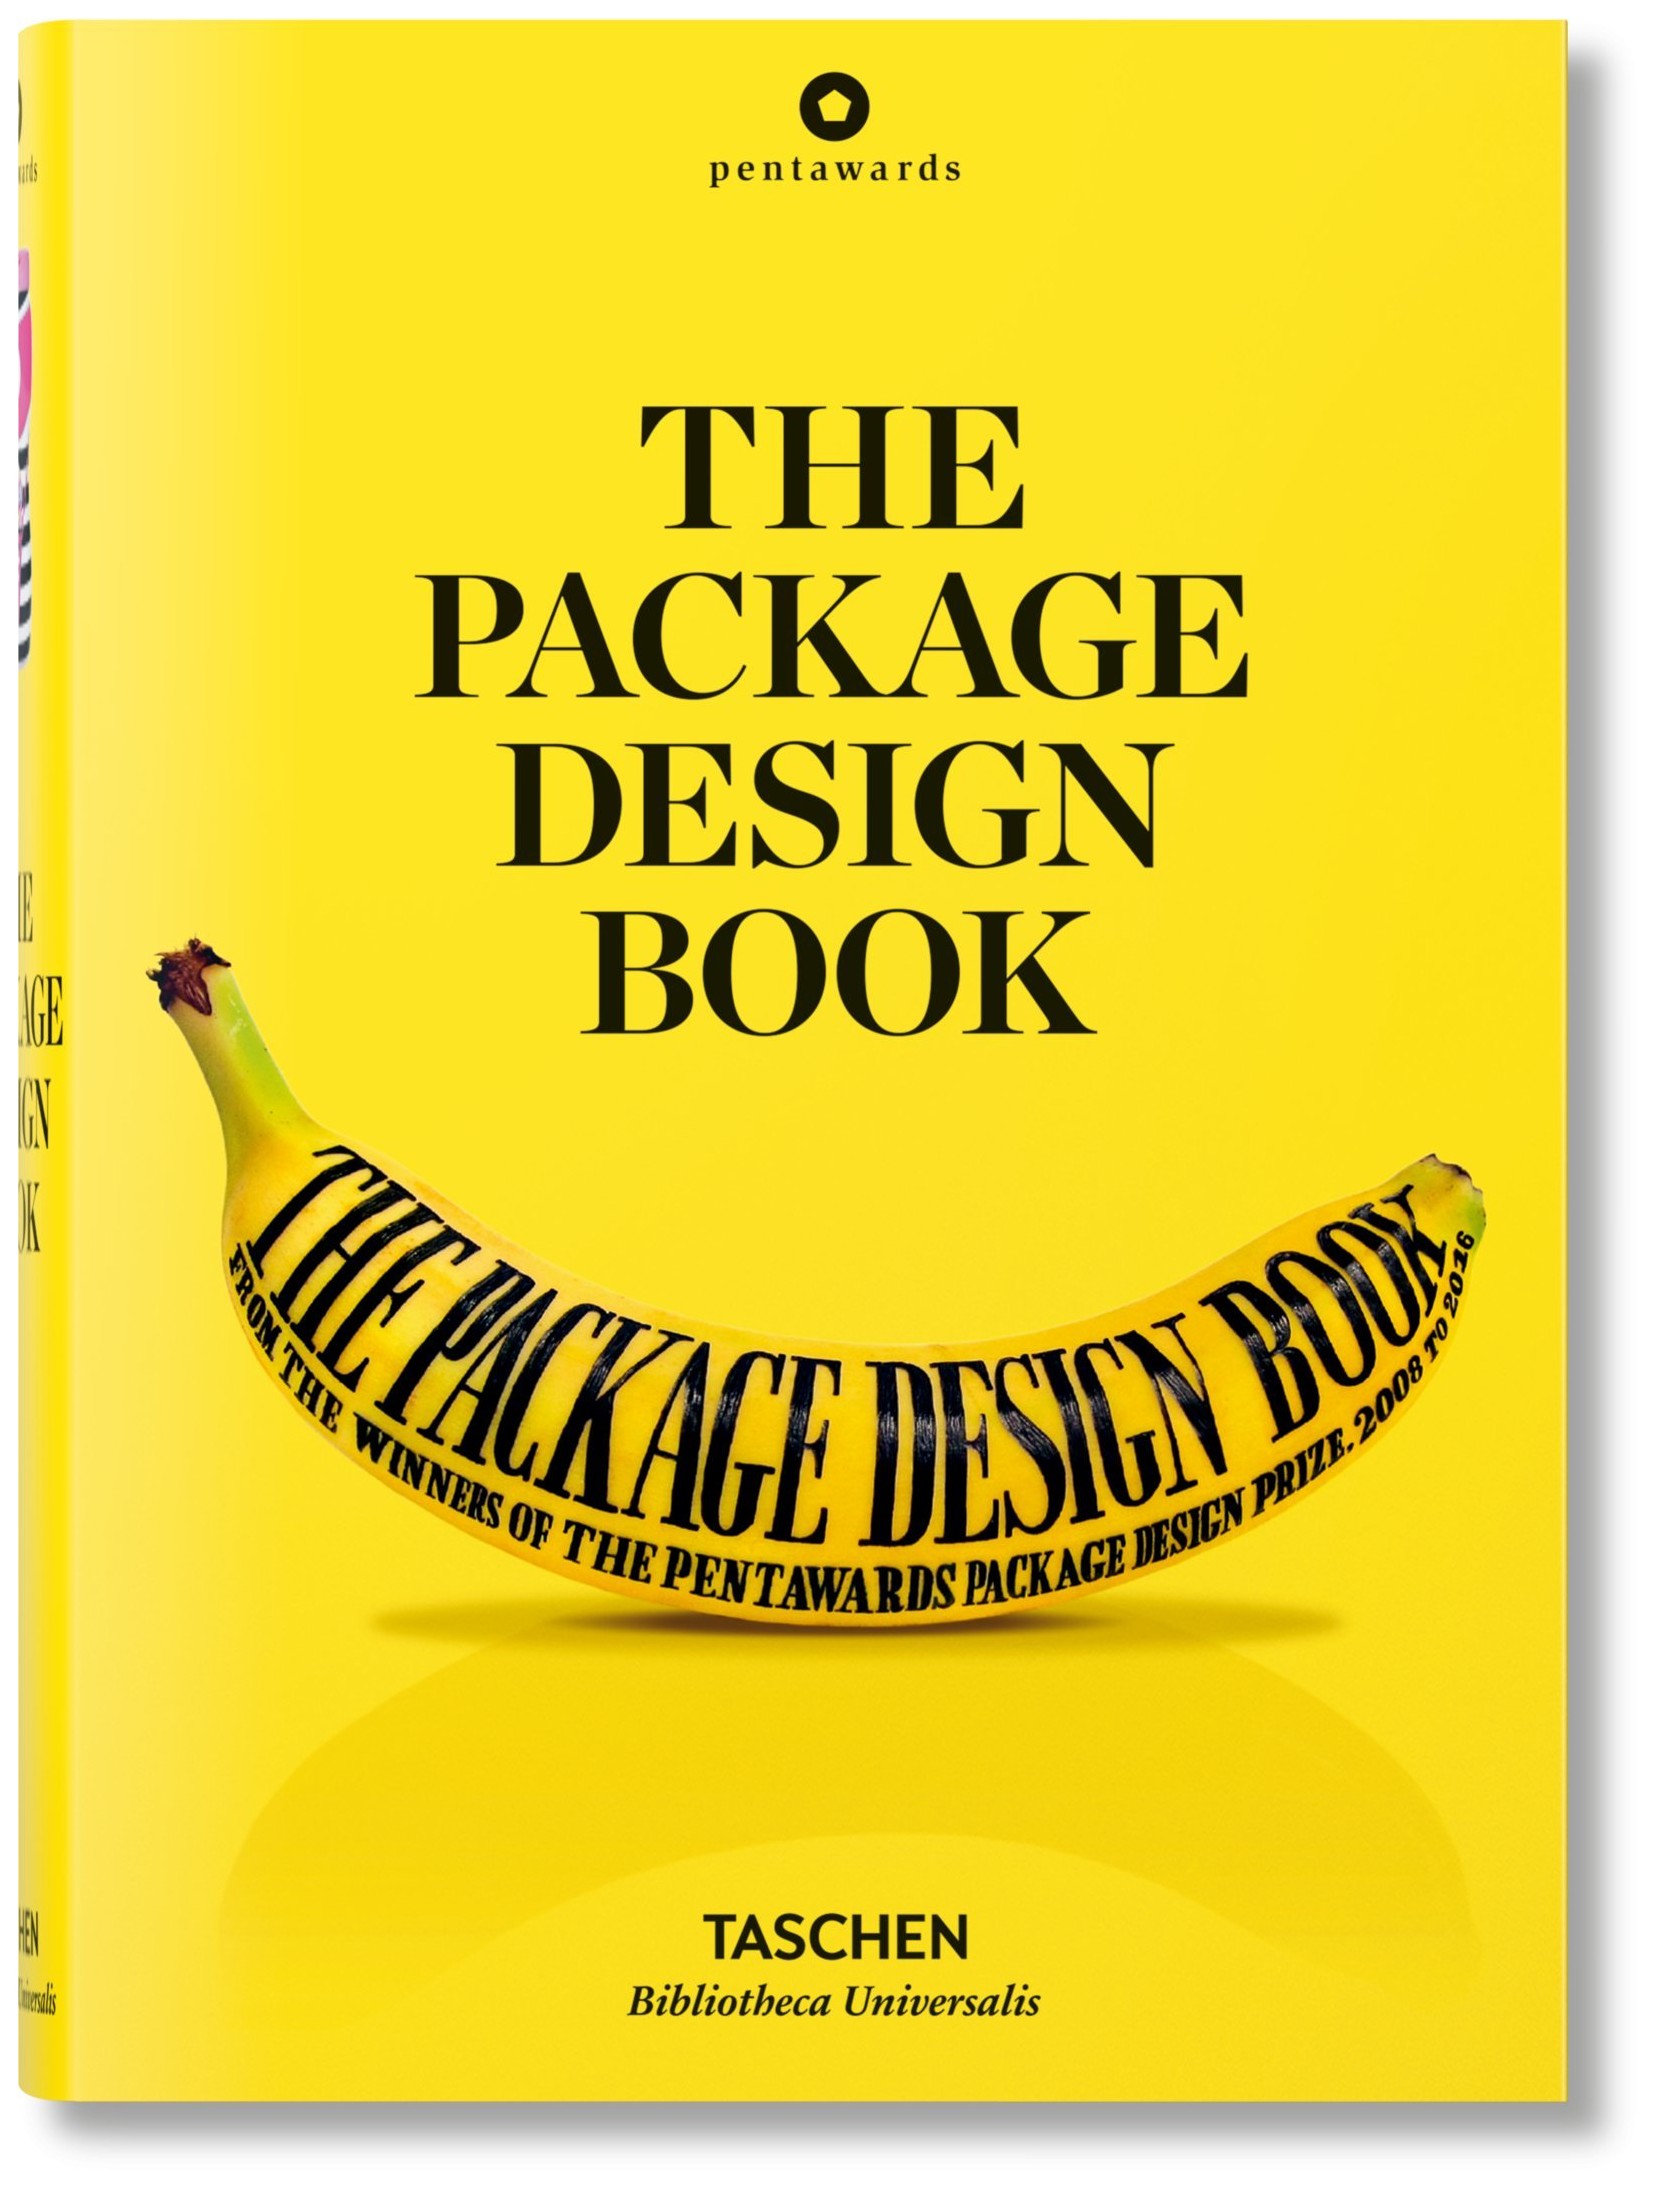 Pentawards, Wiedemann J. - Package Design Book